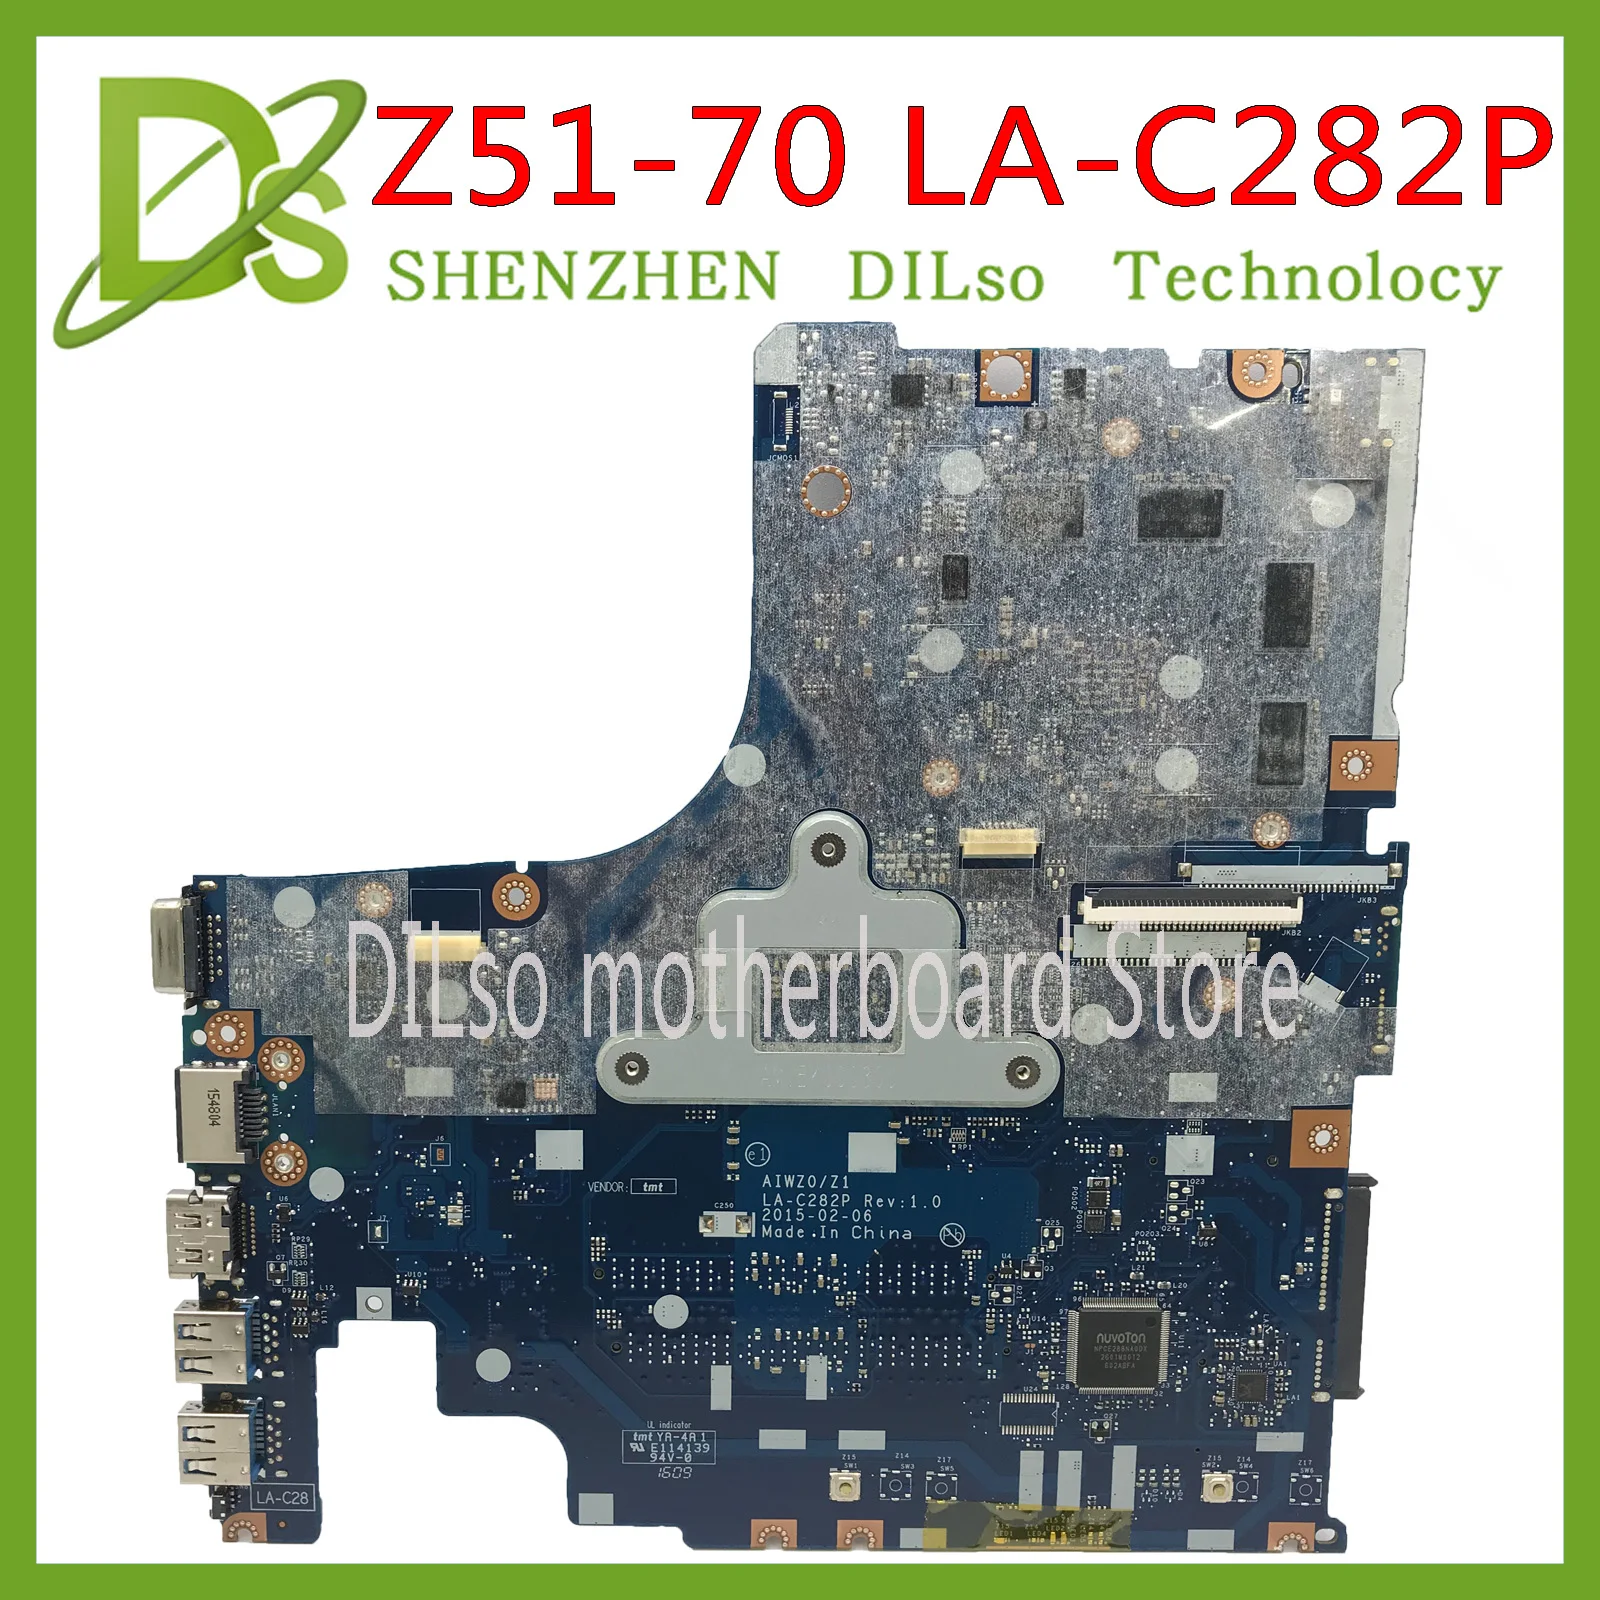 90% OFF  KEFU LA-C282P mainboard For Lenovo Notebook Z51-70 AIWZ0/Z1 LA-C282P laptop motherboard I5-5200U R9